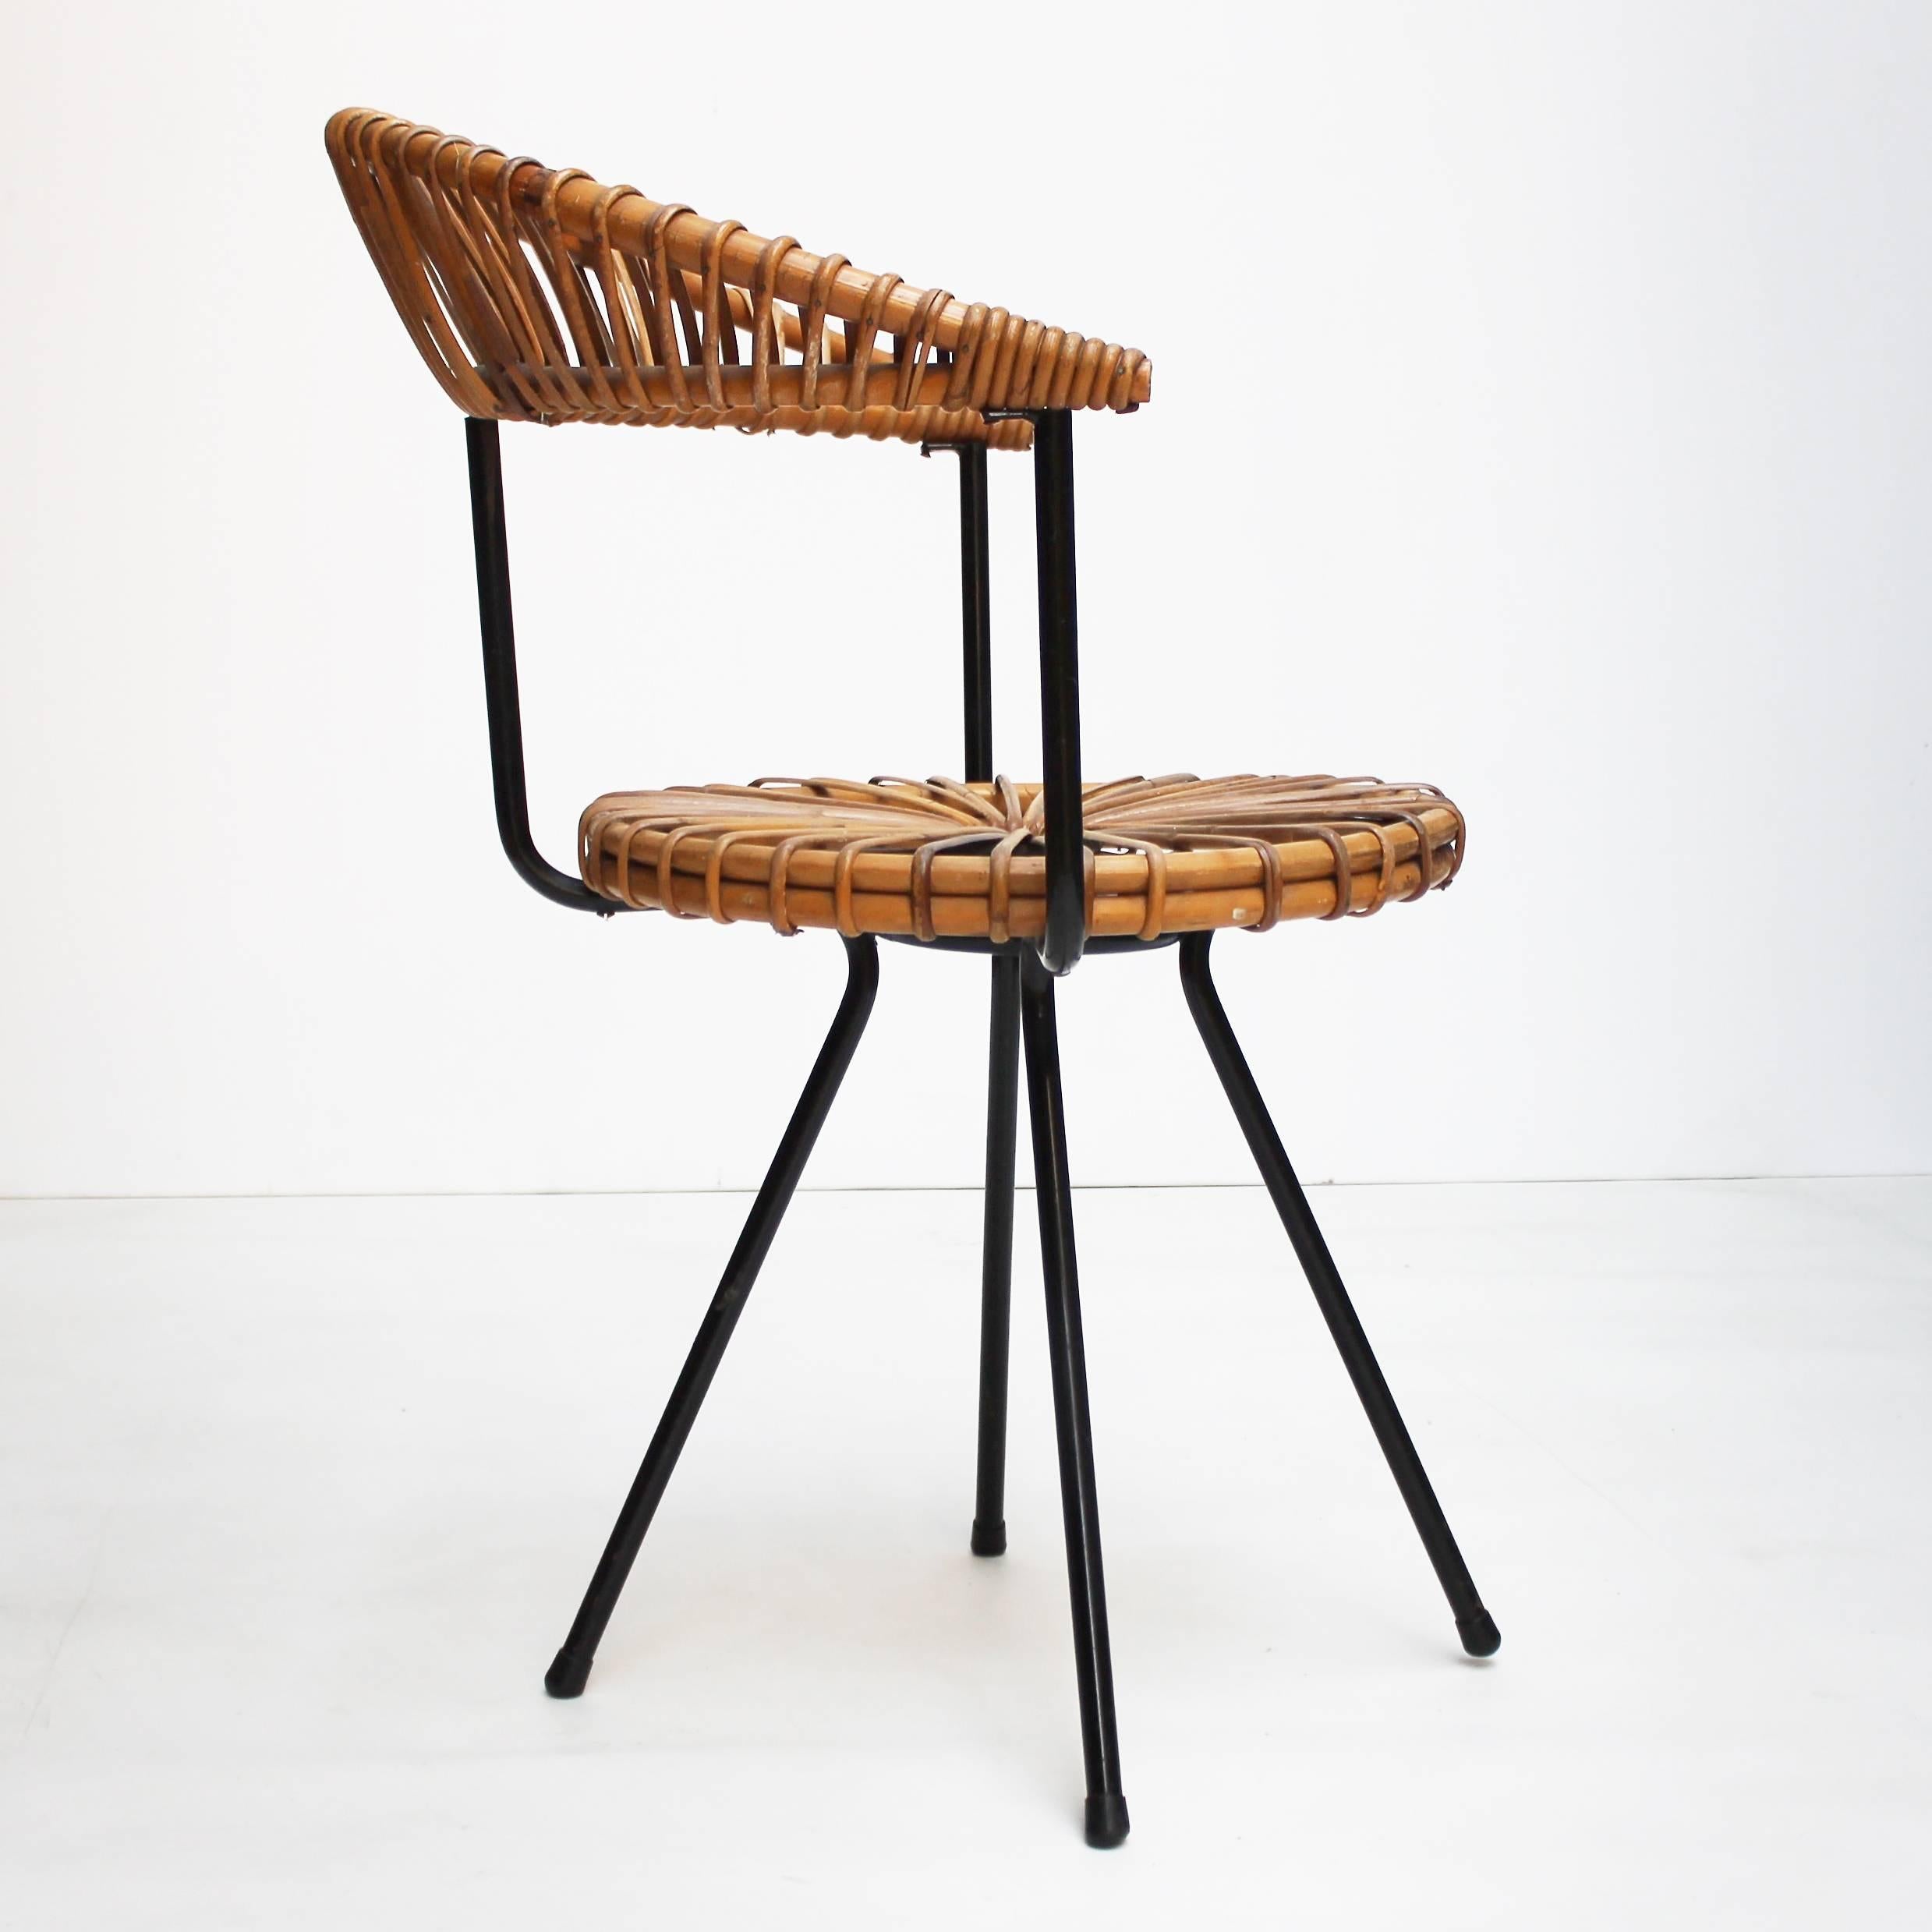 Dutch Rattan Chair by Dirk Van Sliedregt for Rohe Holland